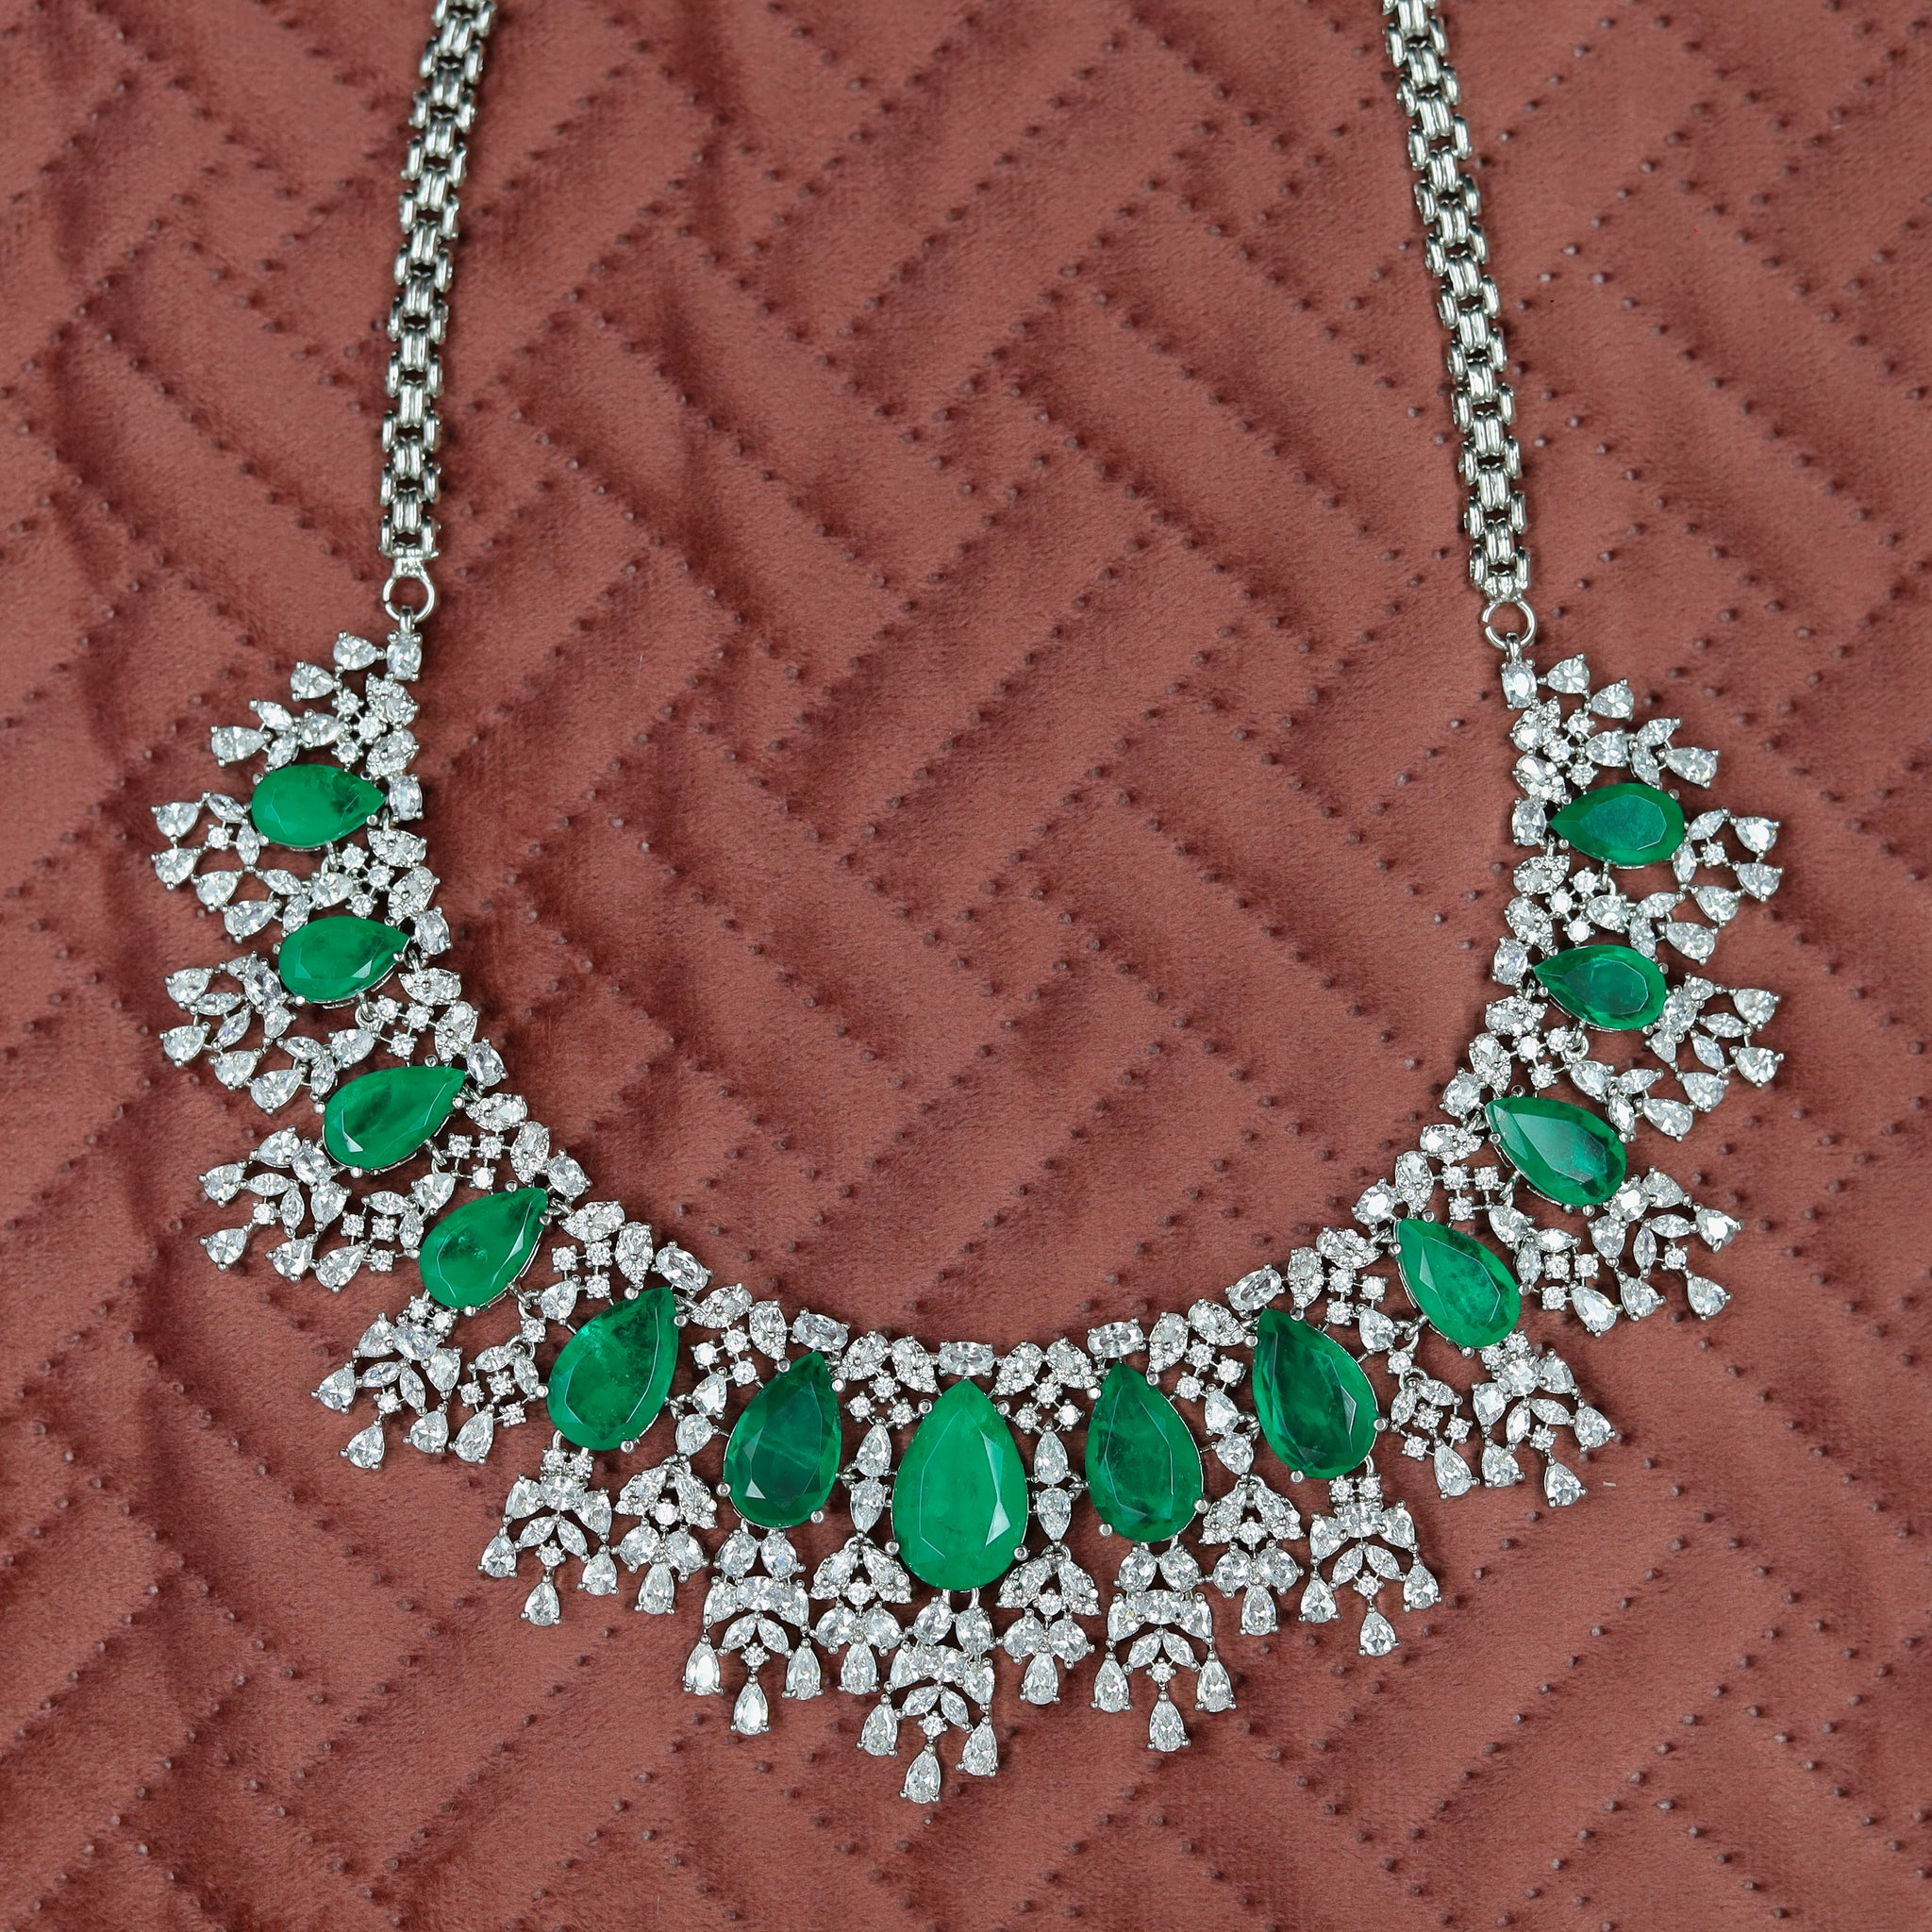 Manish Malhotra Inspired Round Neck Zircon/AD Necklace Set 11889-69